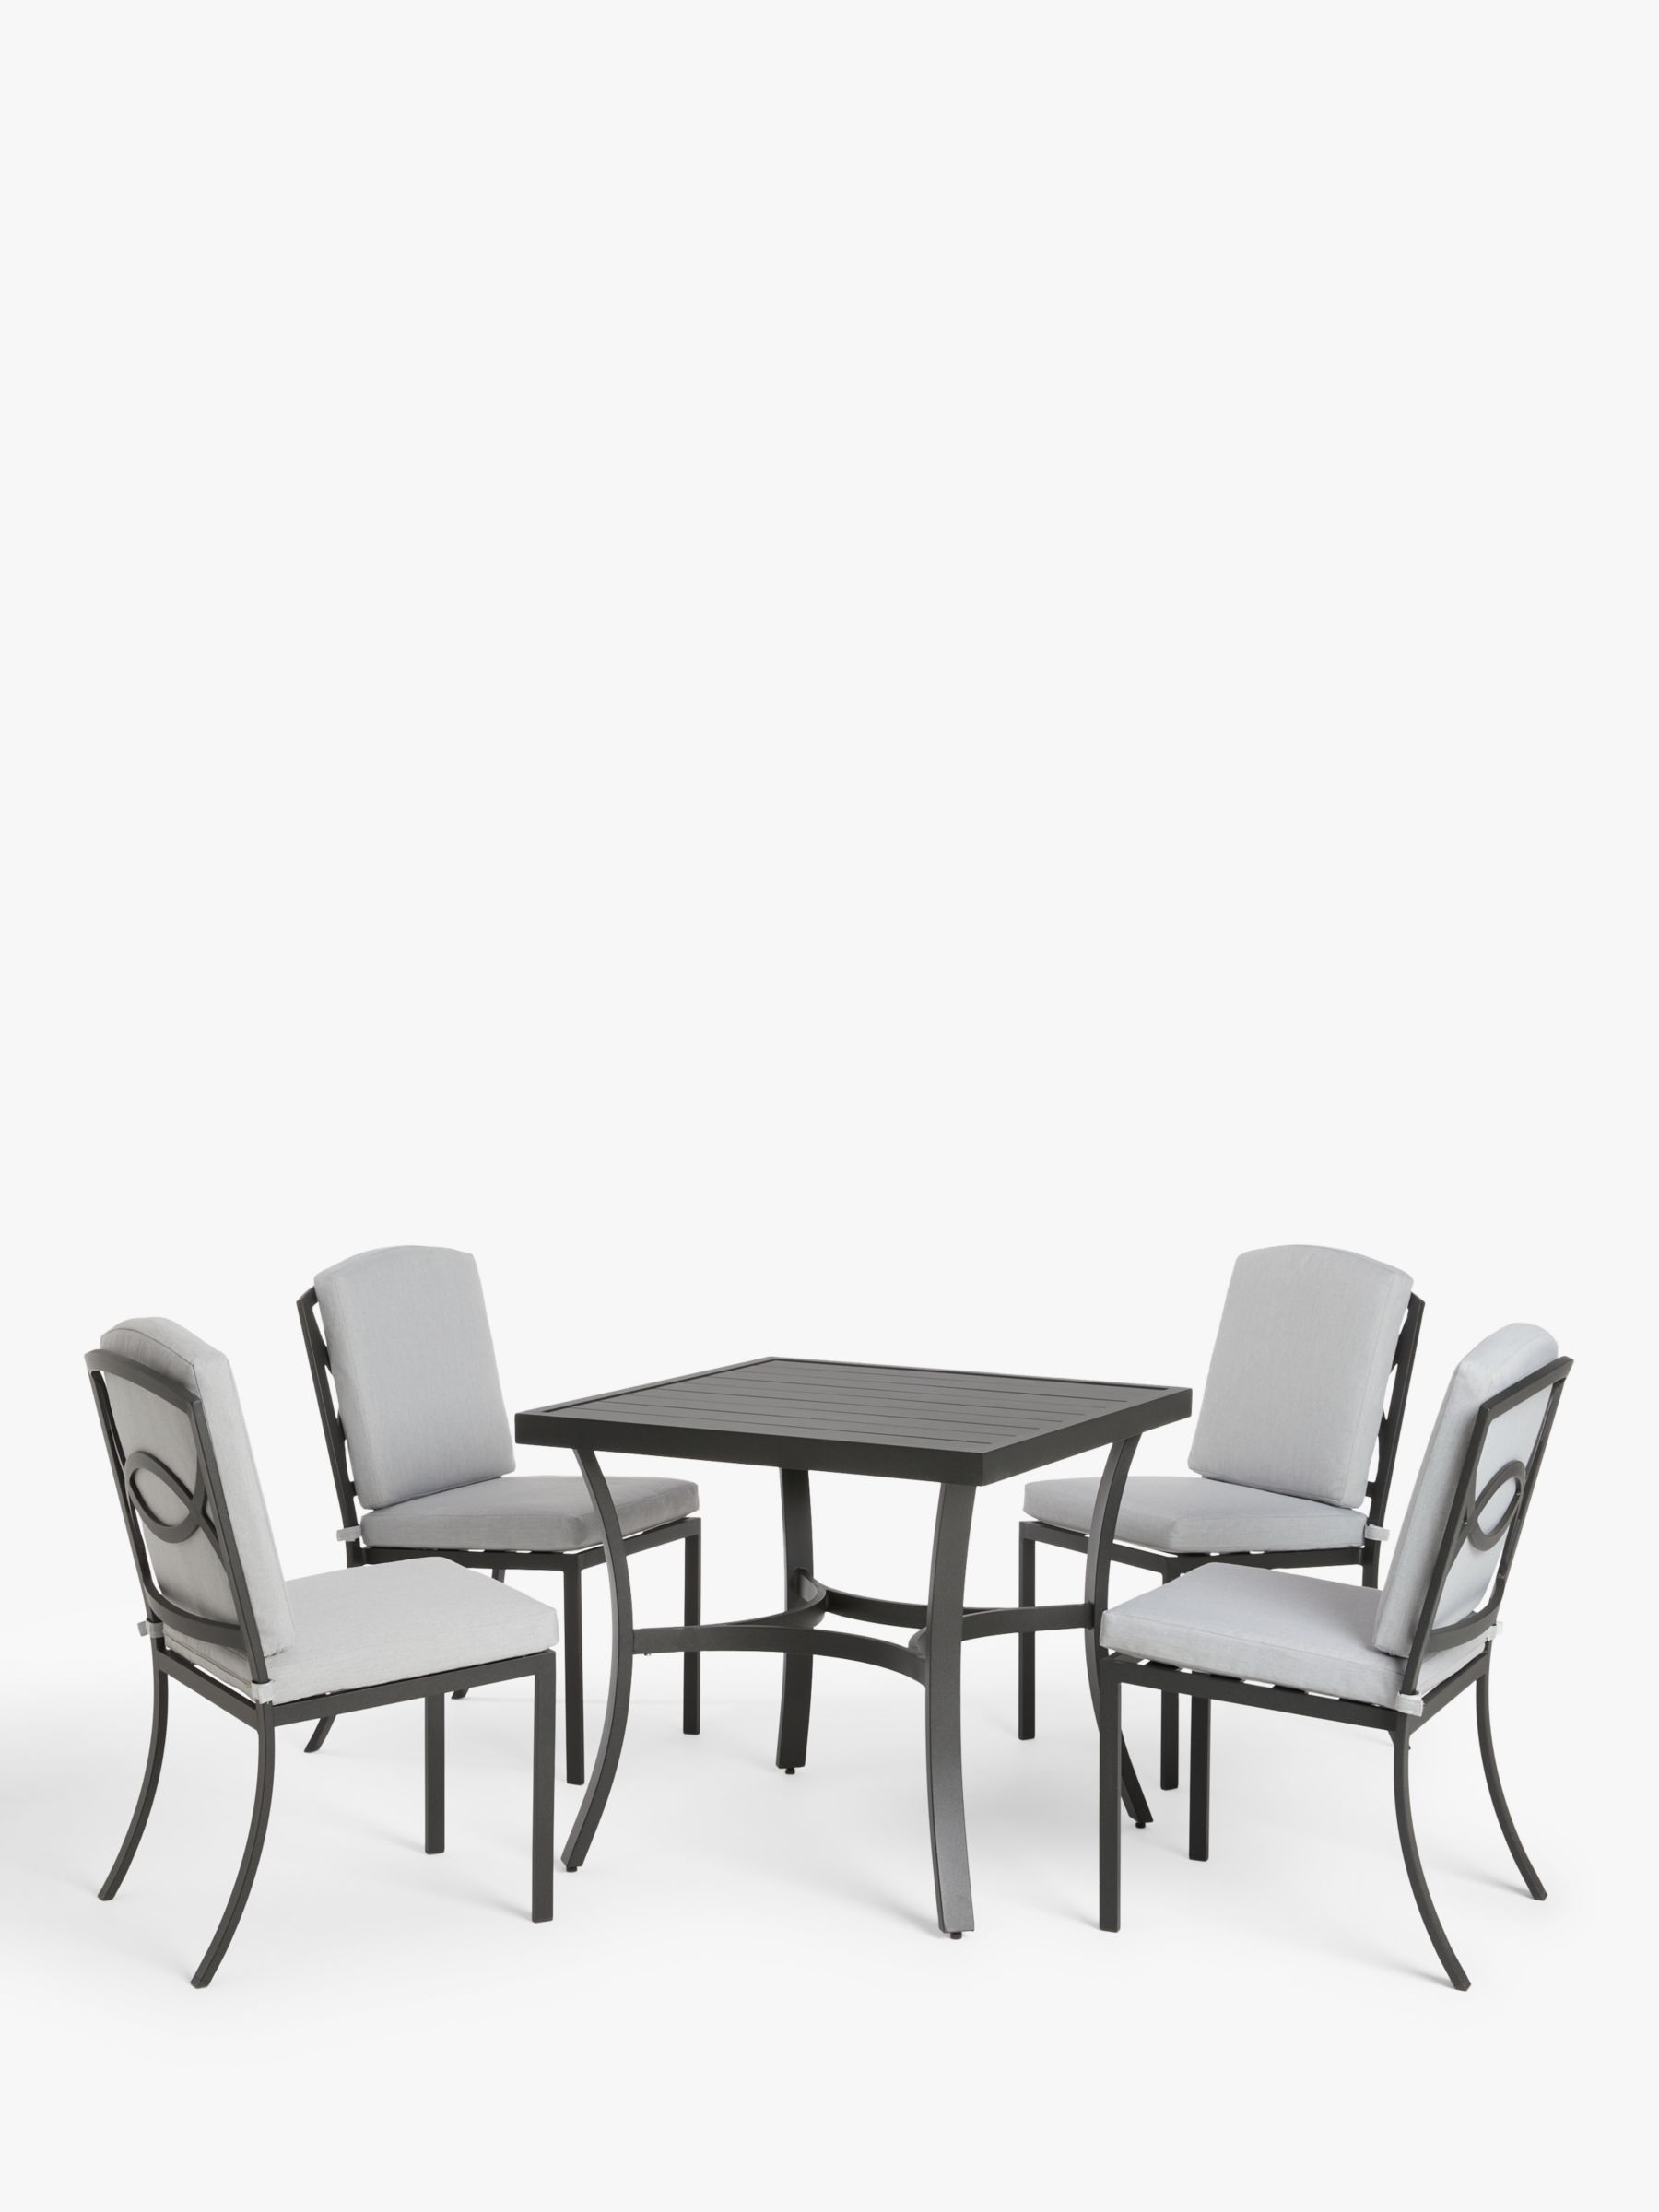 Photo of John lewis marlow aluminium 4 seater garden dining table & chairs set grey